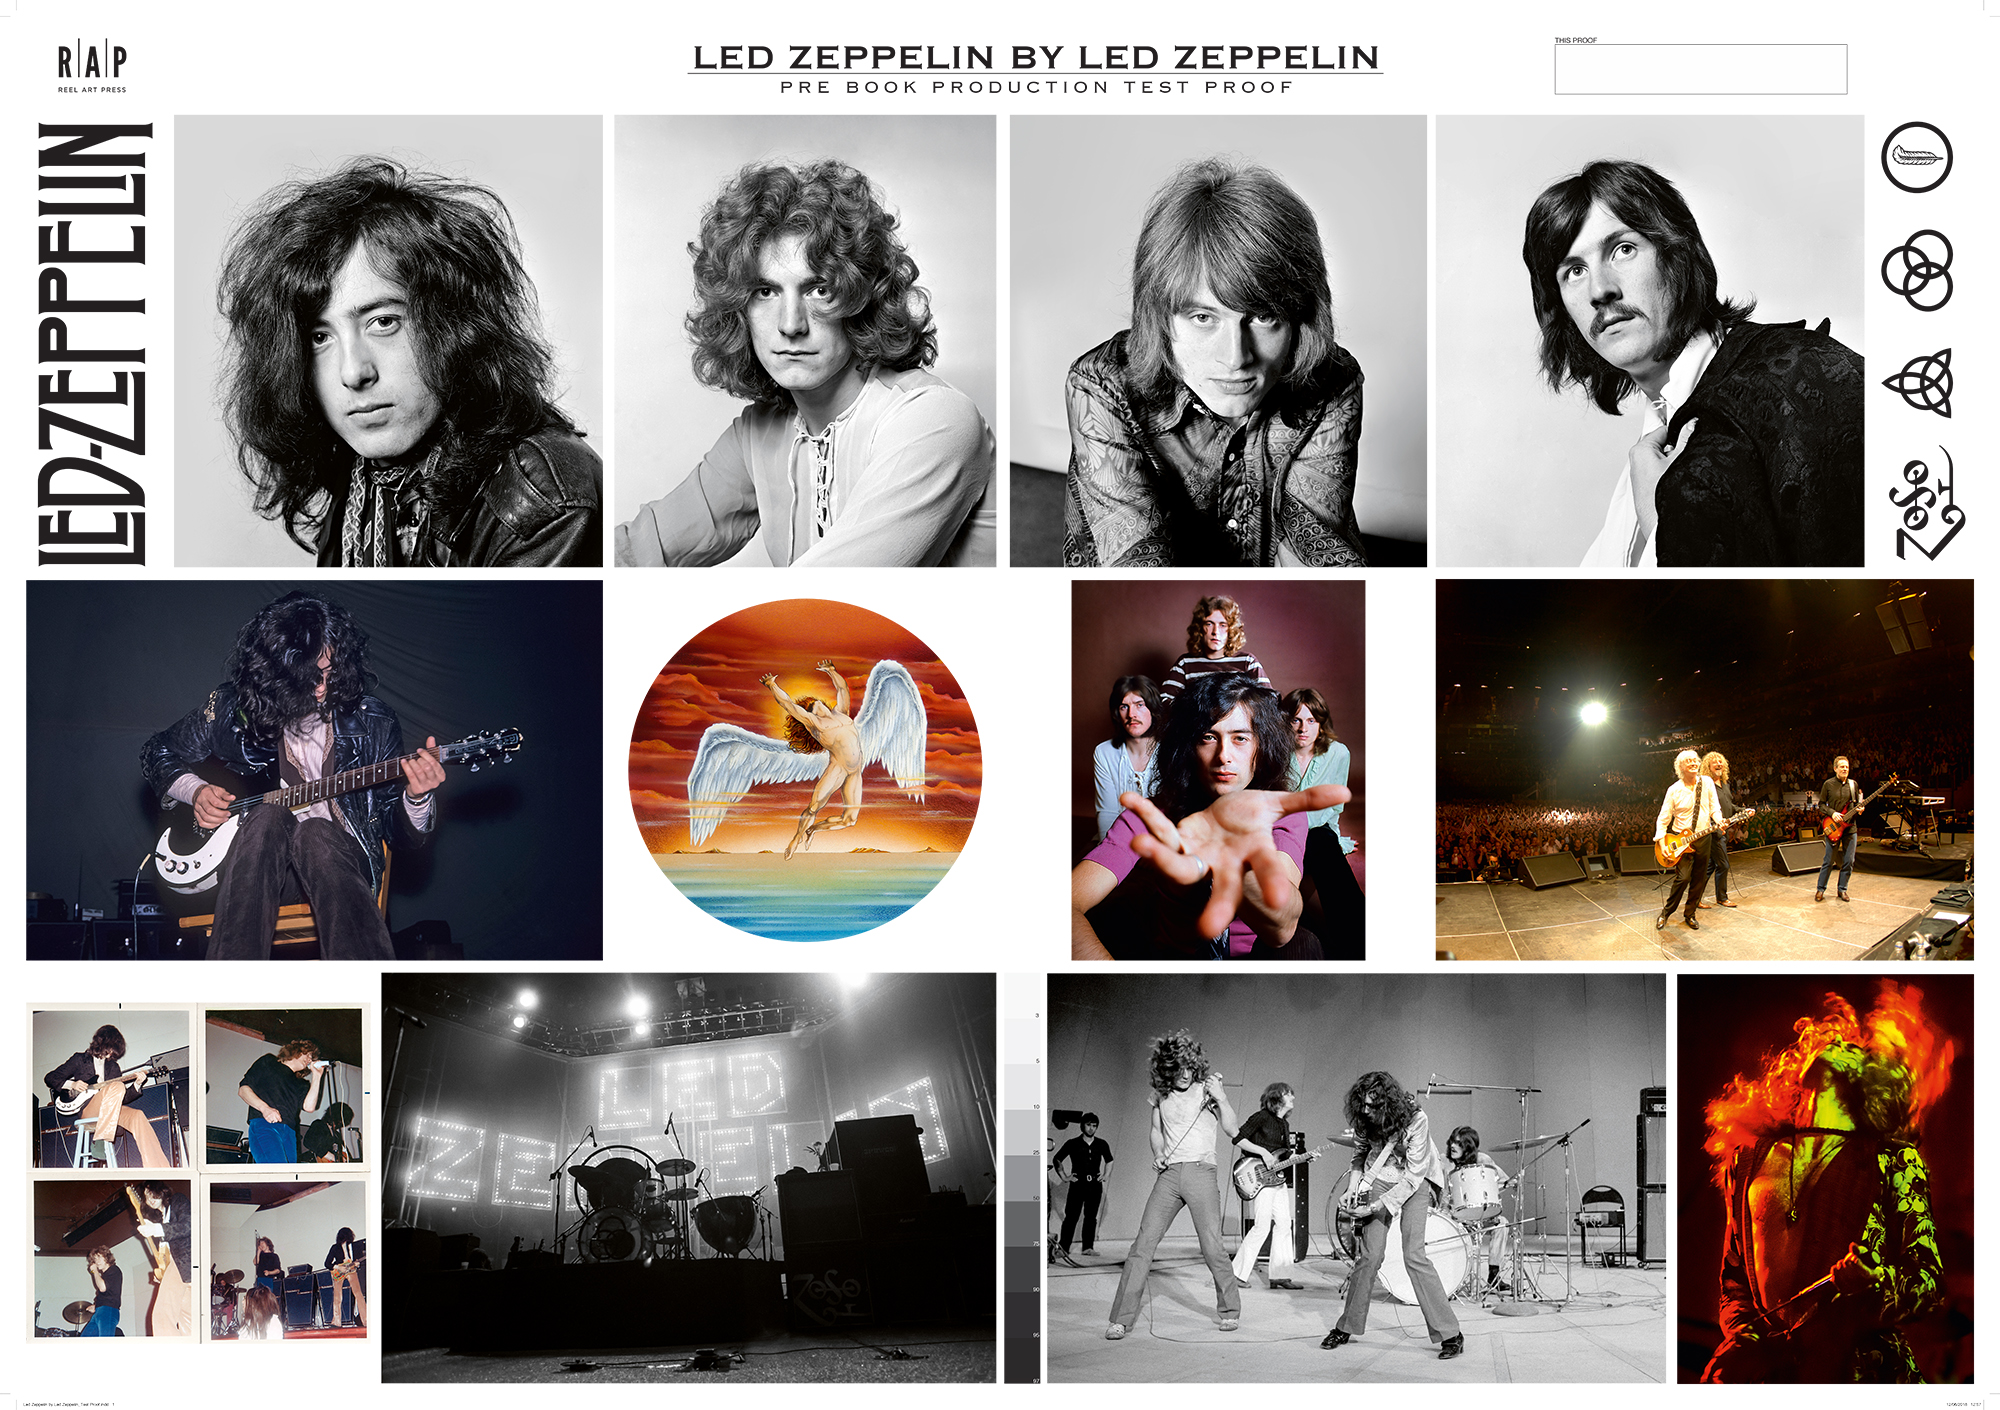 Led Zeppelin - Official Website